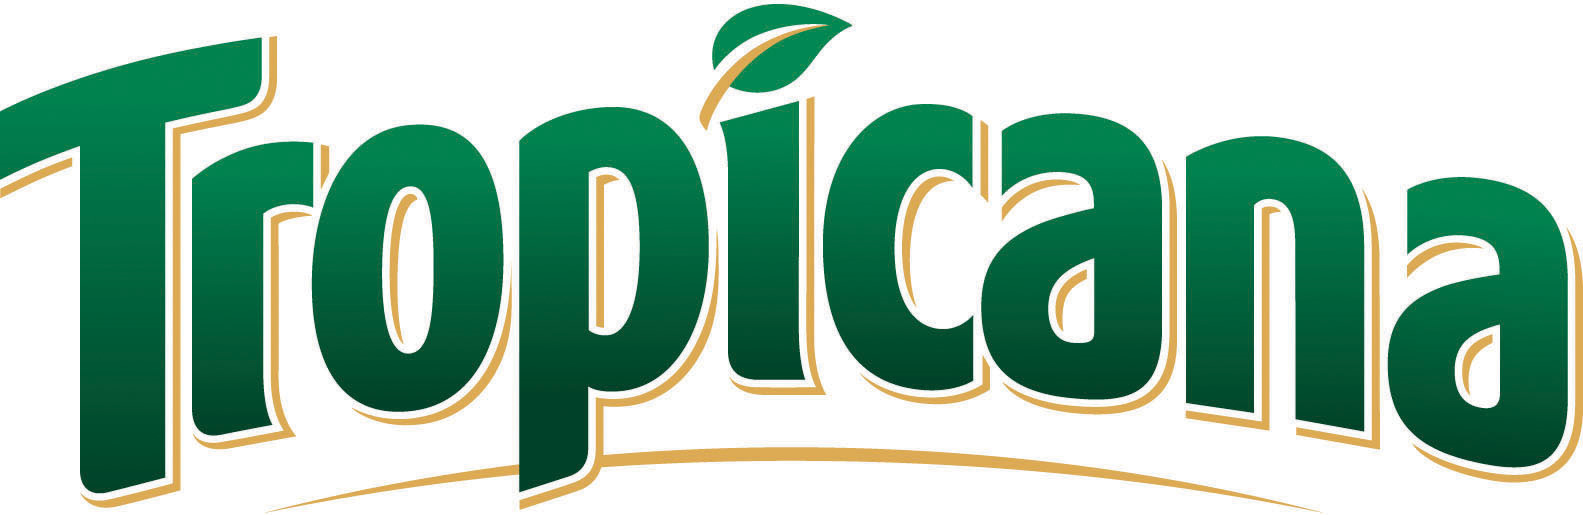 Transportation Company - Tropicana - Food Products